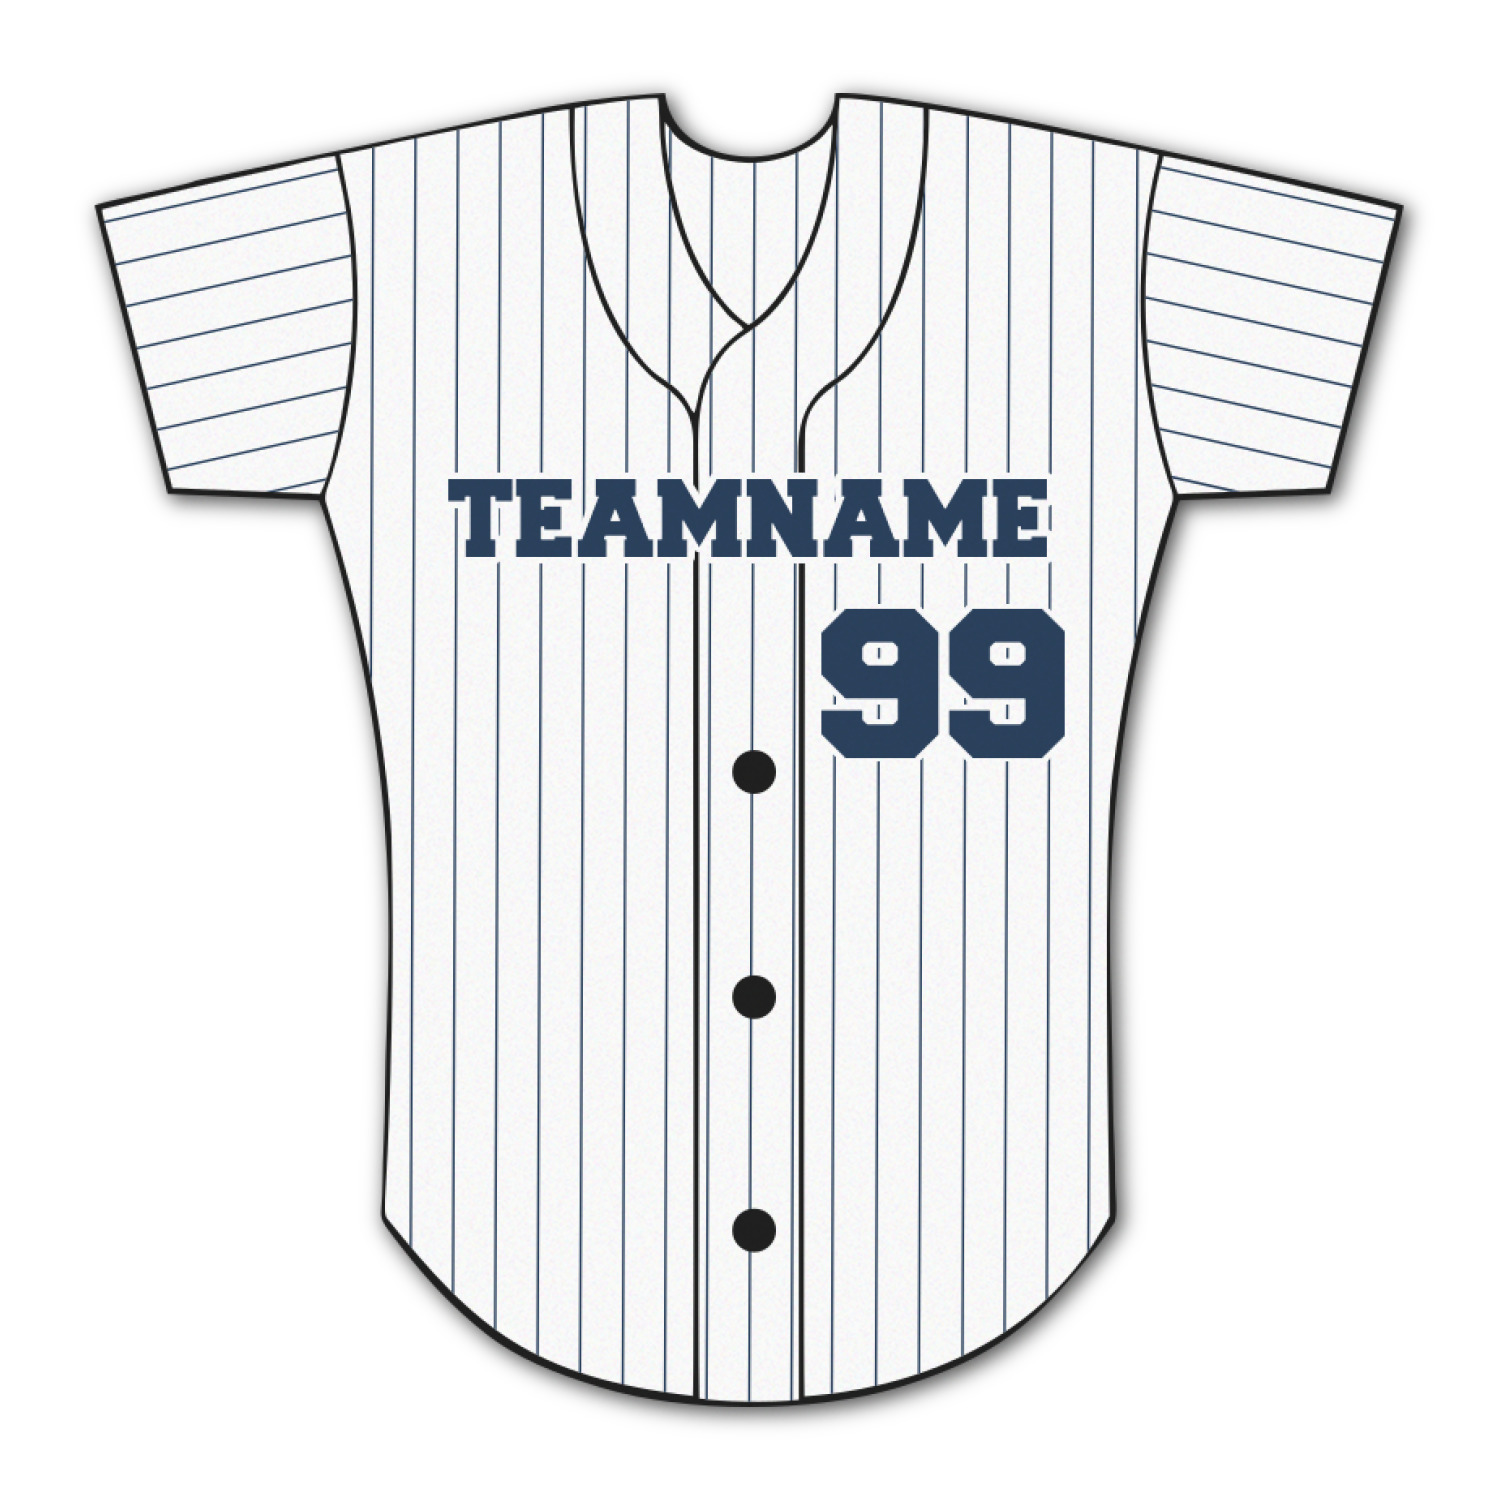 Custom Baseball Uniforms, Sample Design A